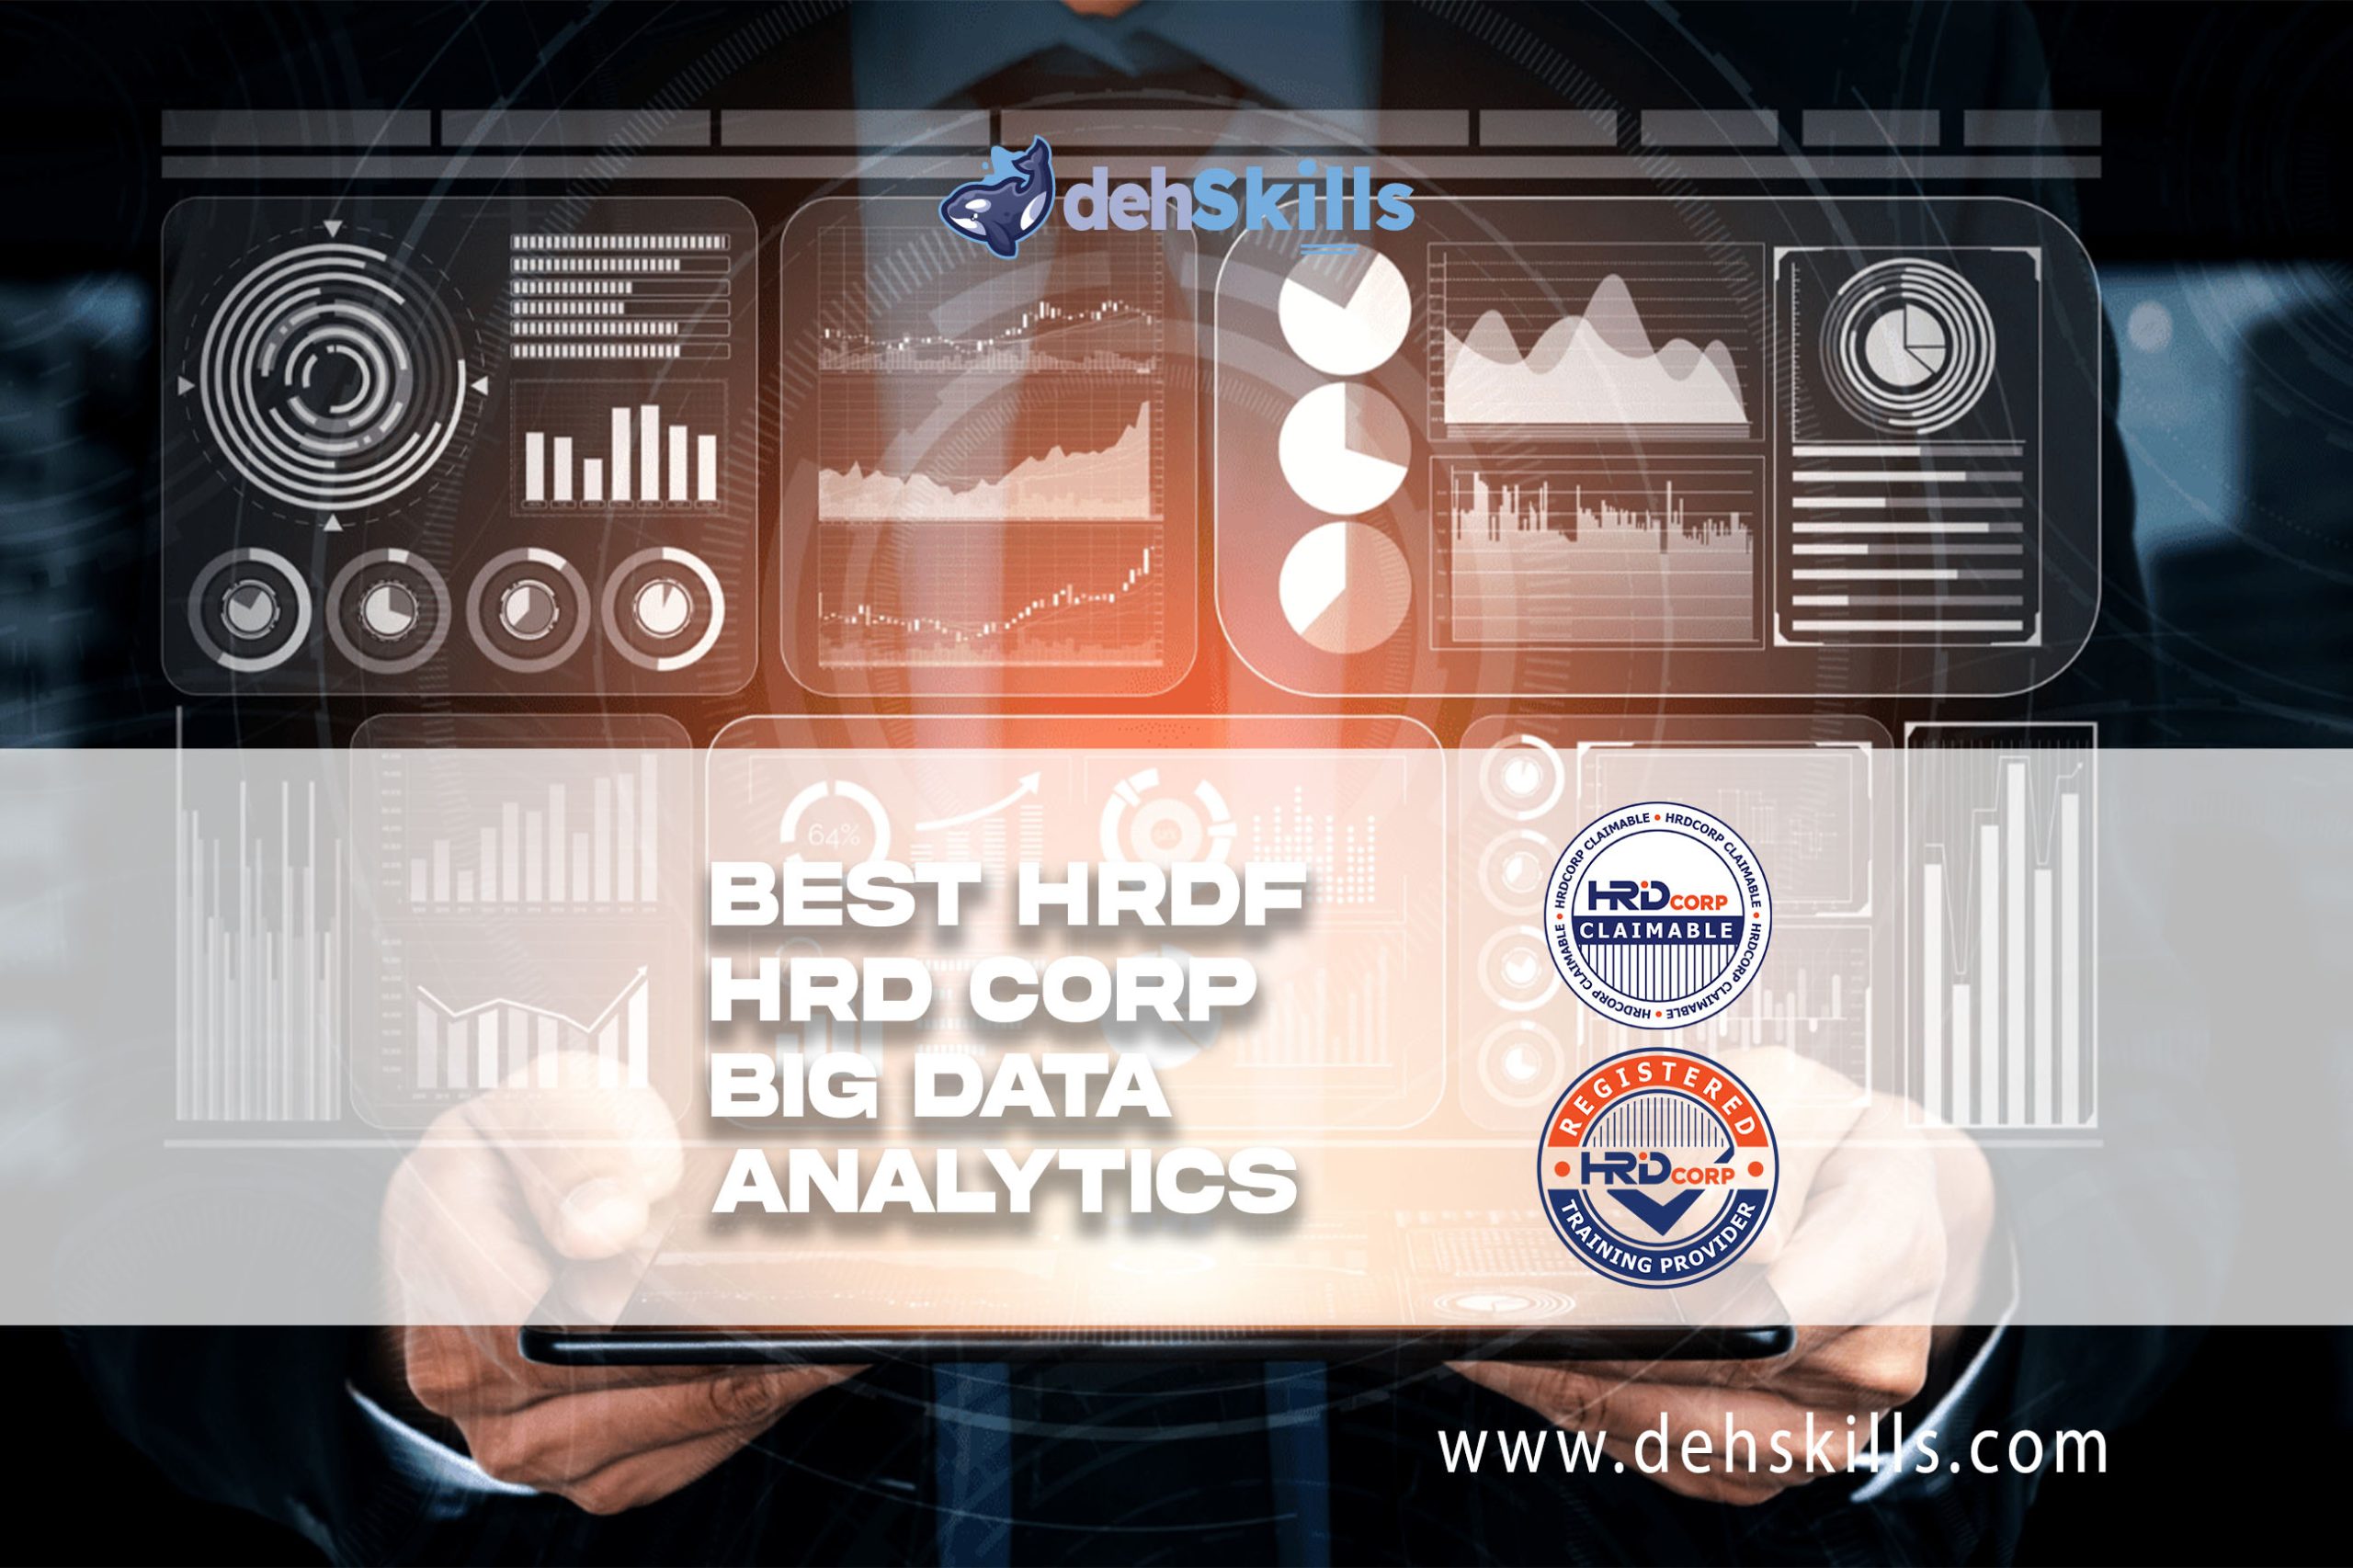 HRDF HRD Corp Claimable Big Data Analytics Training